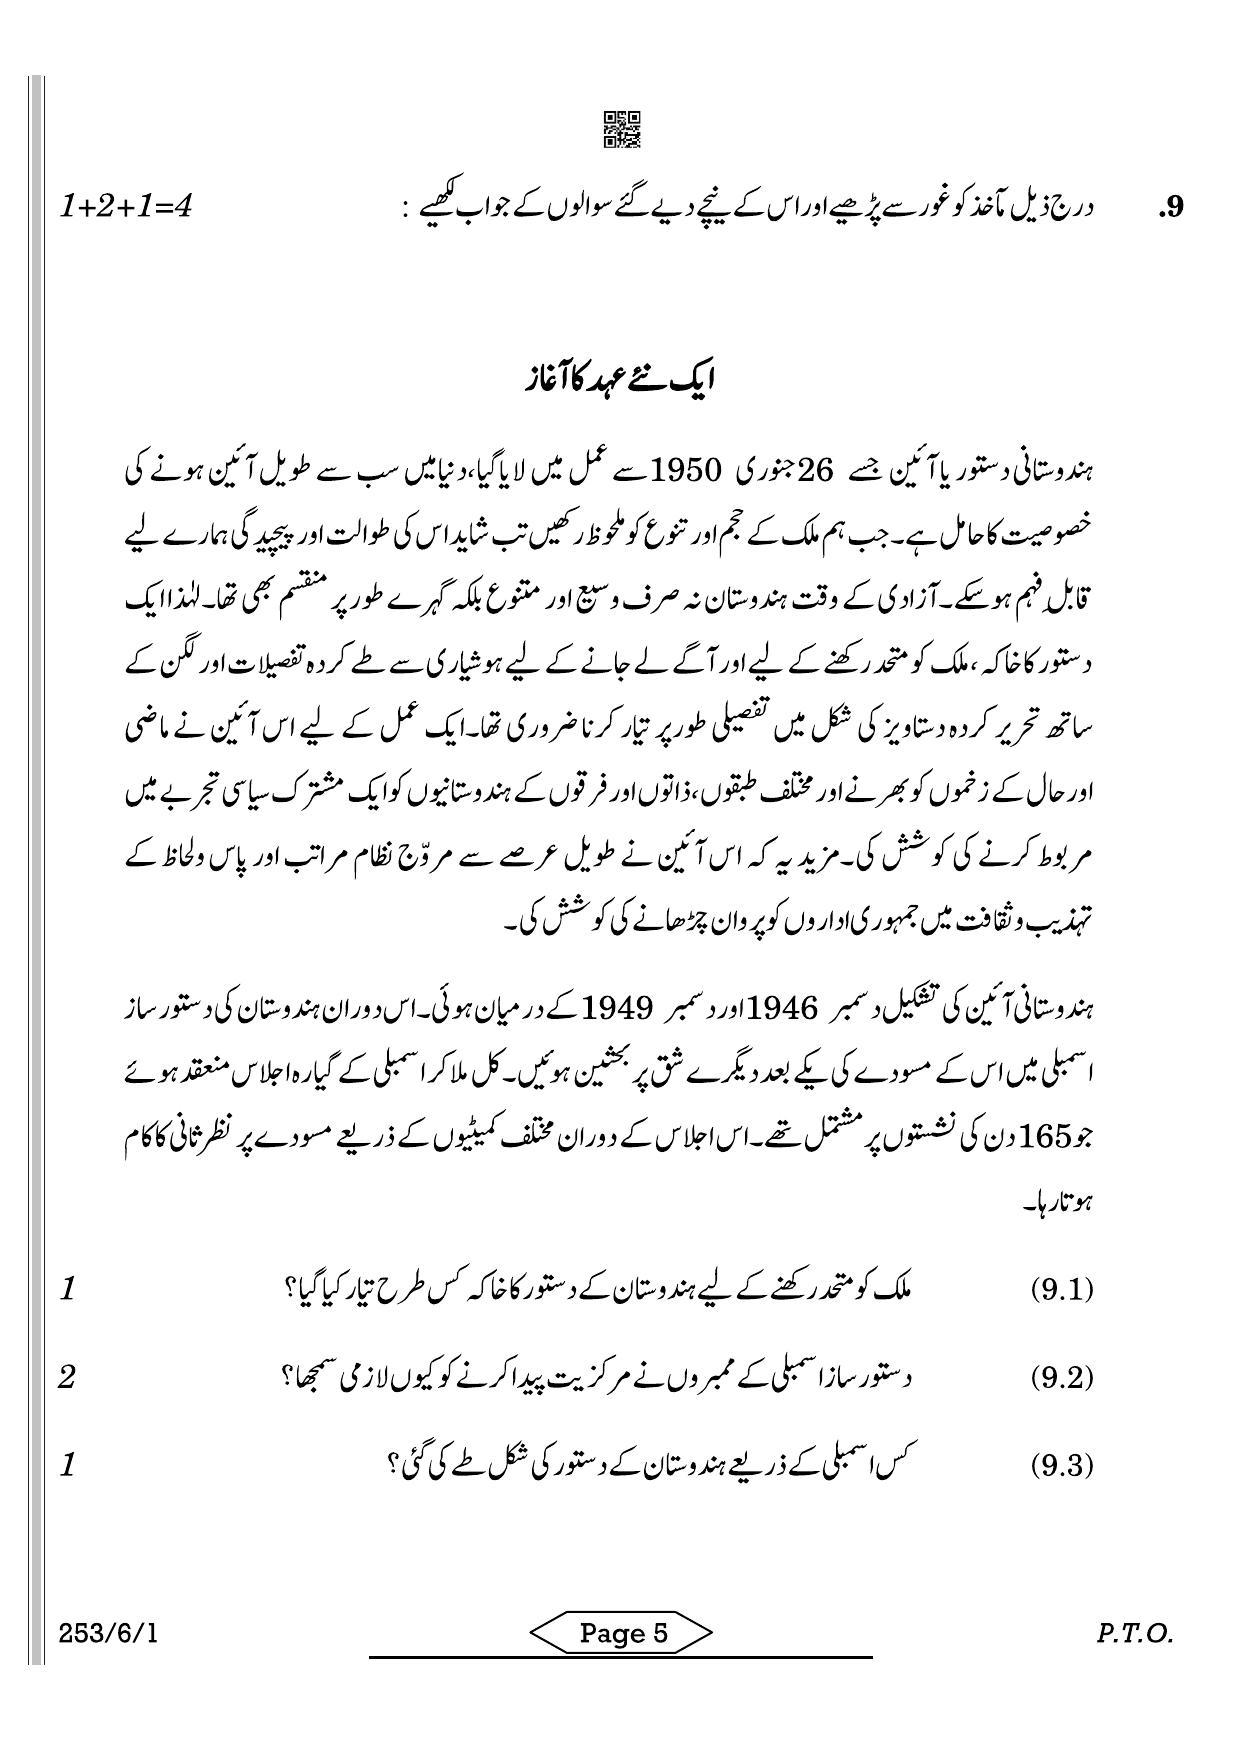 CBSE Class 12 253-6-1 History Urdu 2022 Compartment Question Paper - Page 5